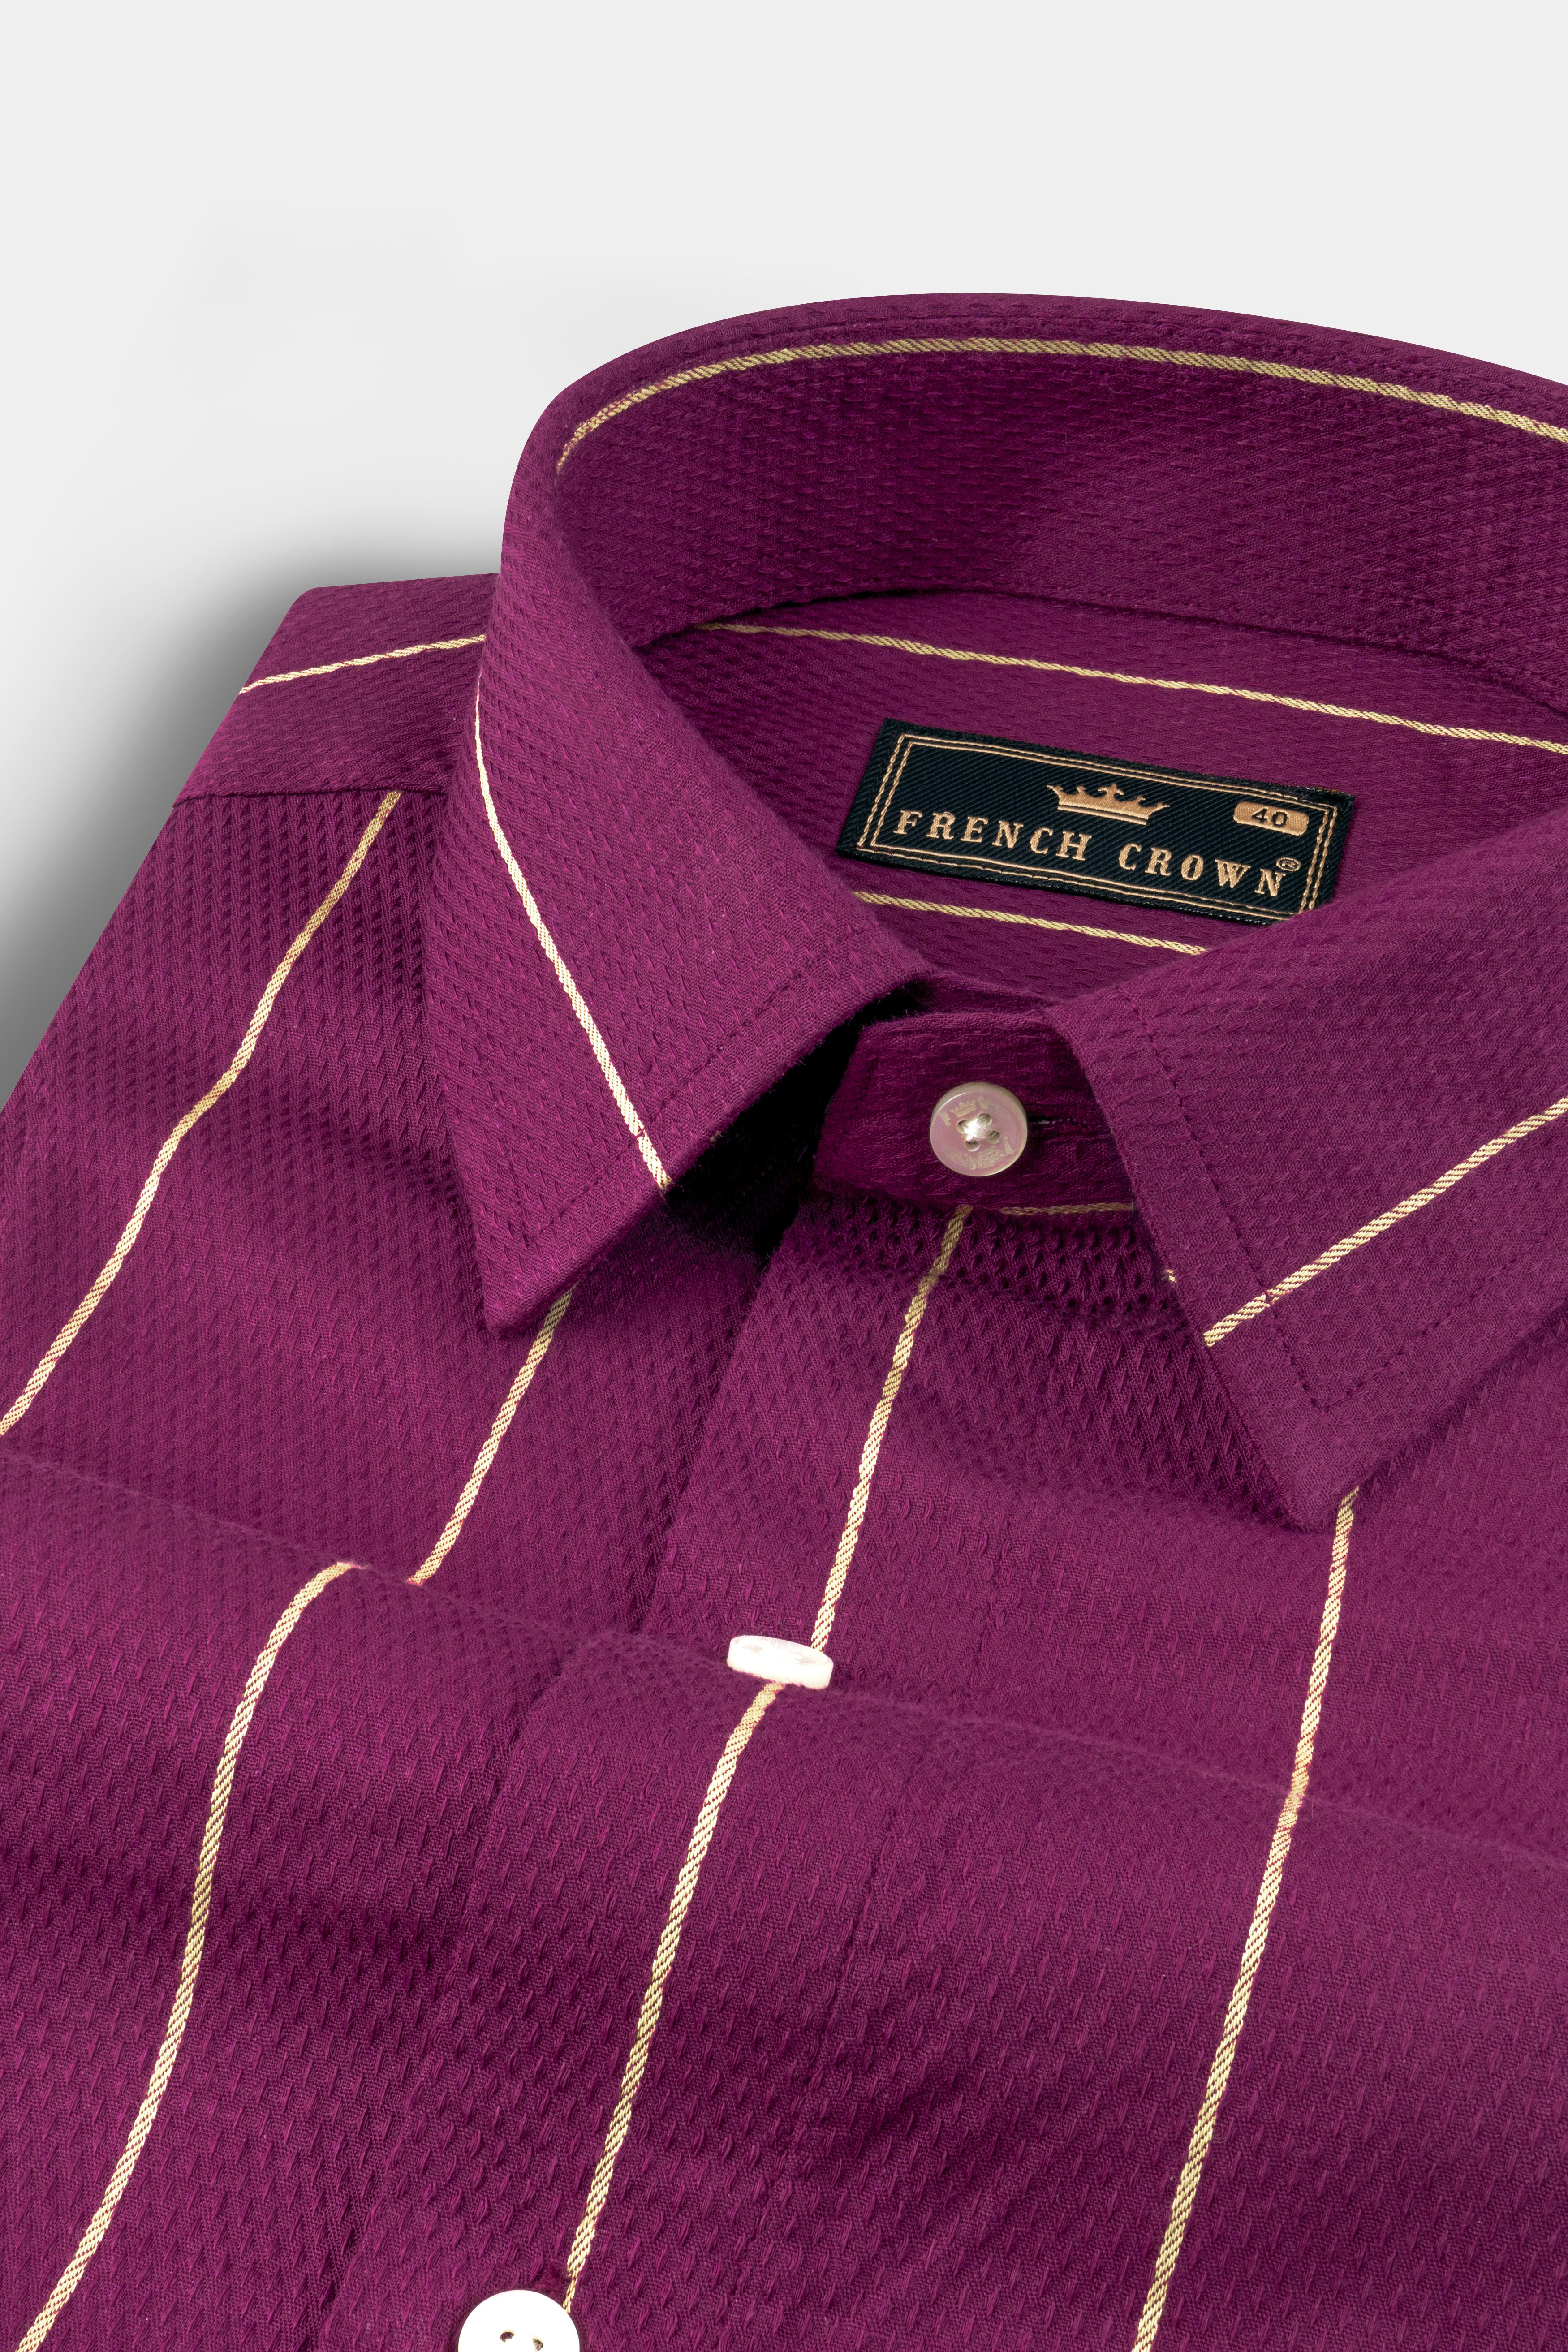 Royal Heath And Tumbleweed Striped Dobby Textured Premium Giza Cotton Shirt